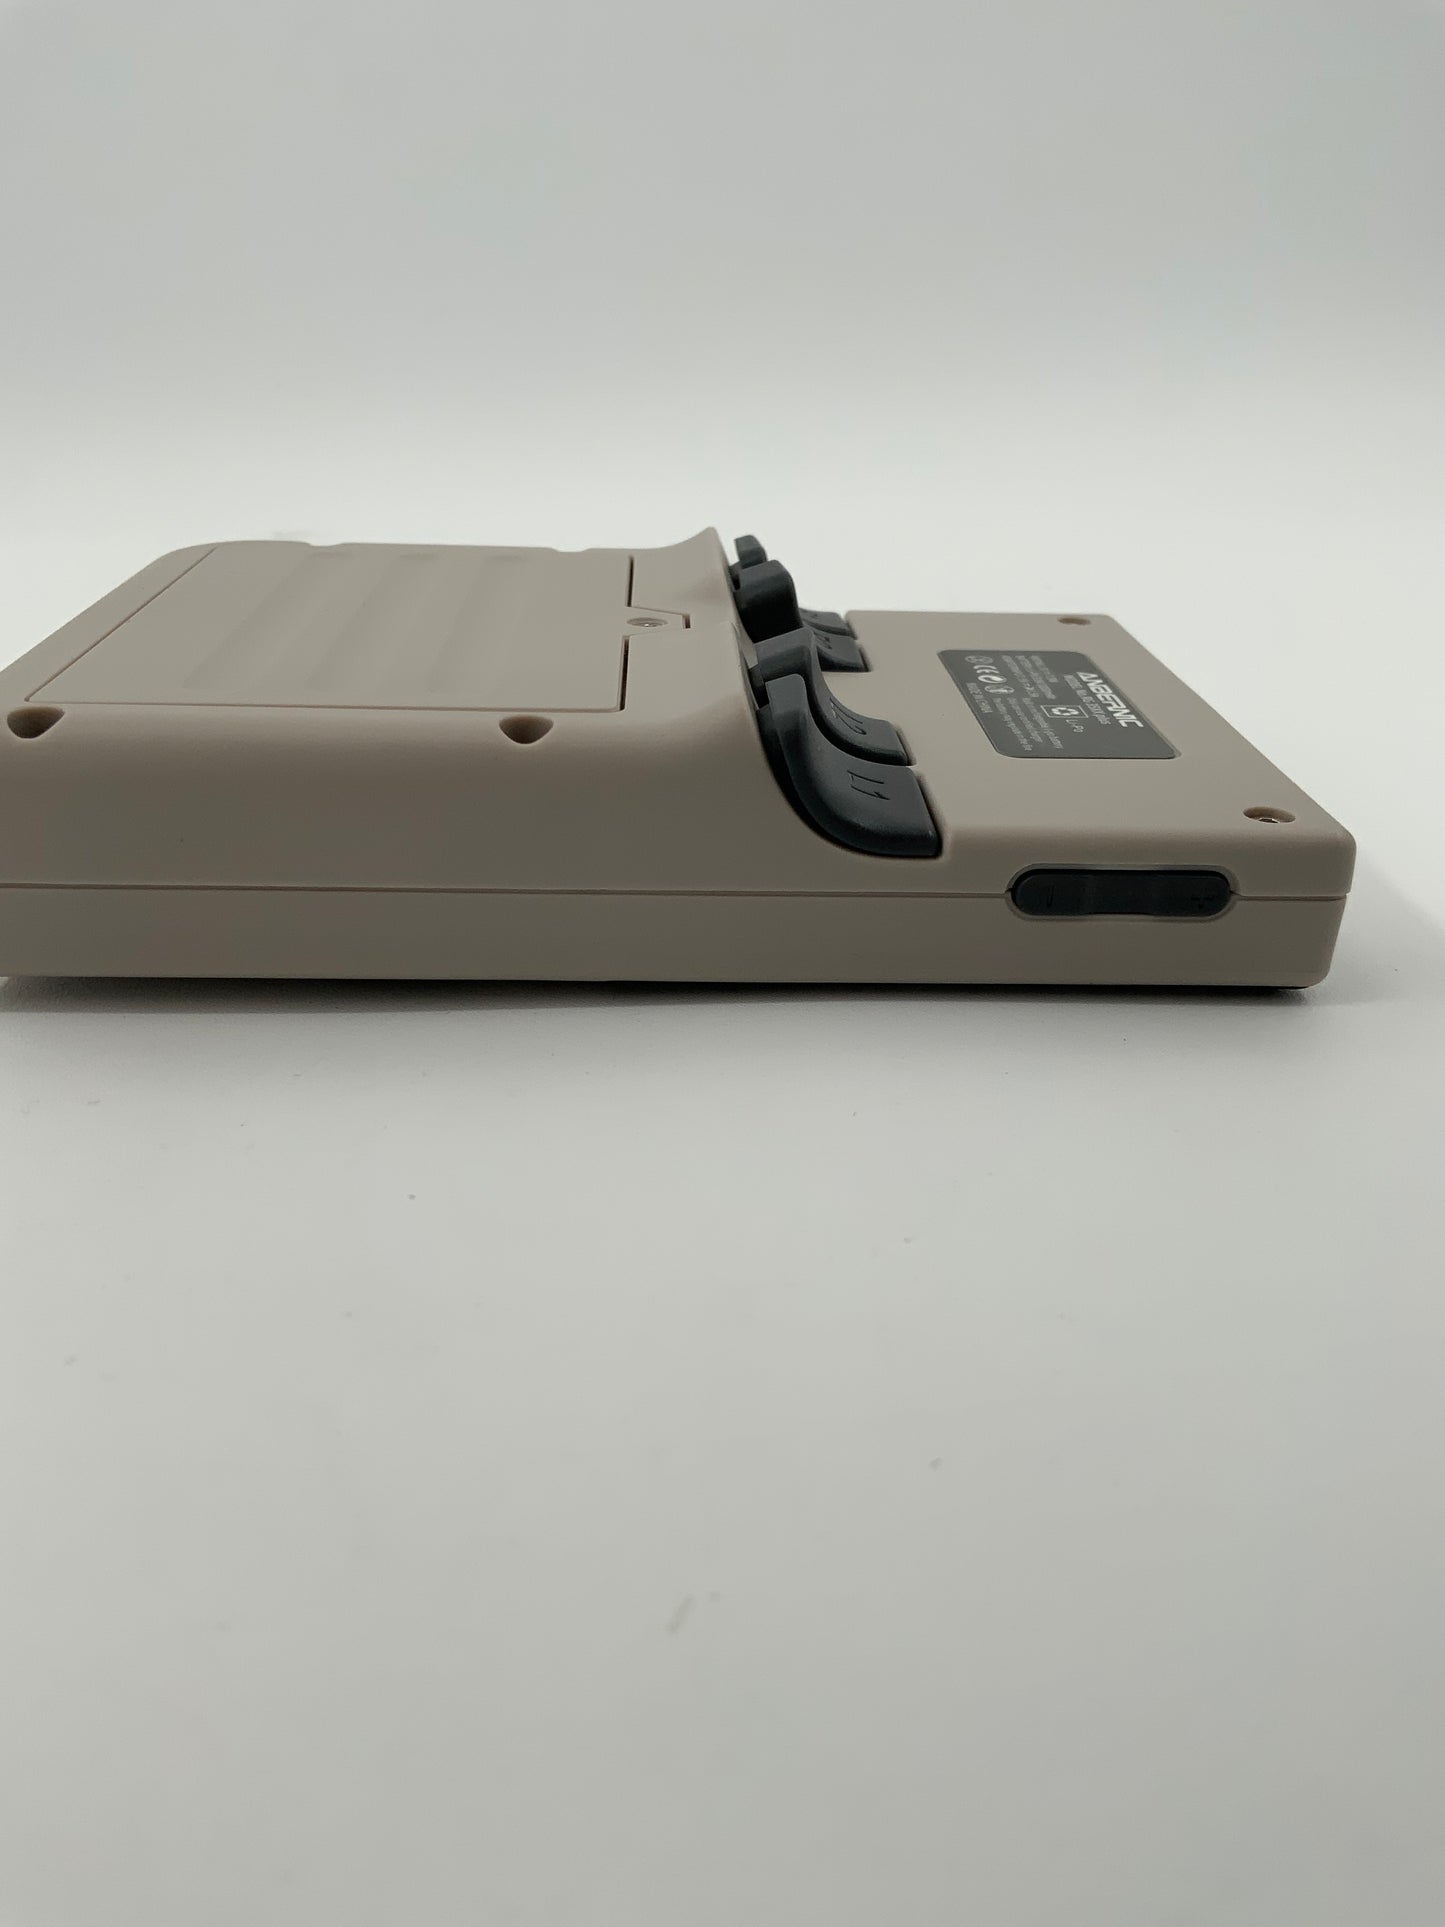 RG35XX Plus Retro Video Handheld Game Console